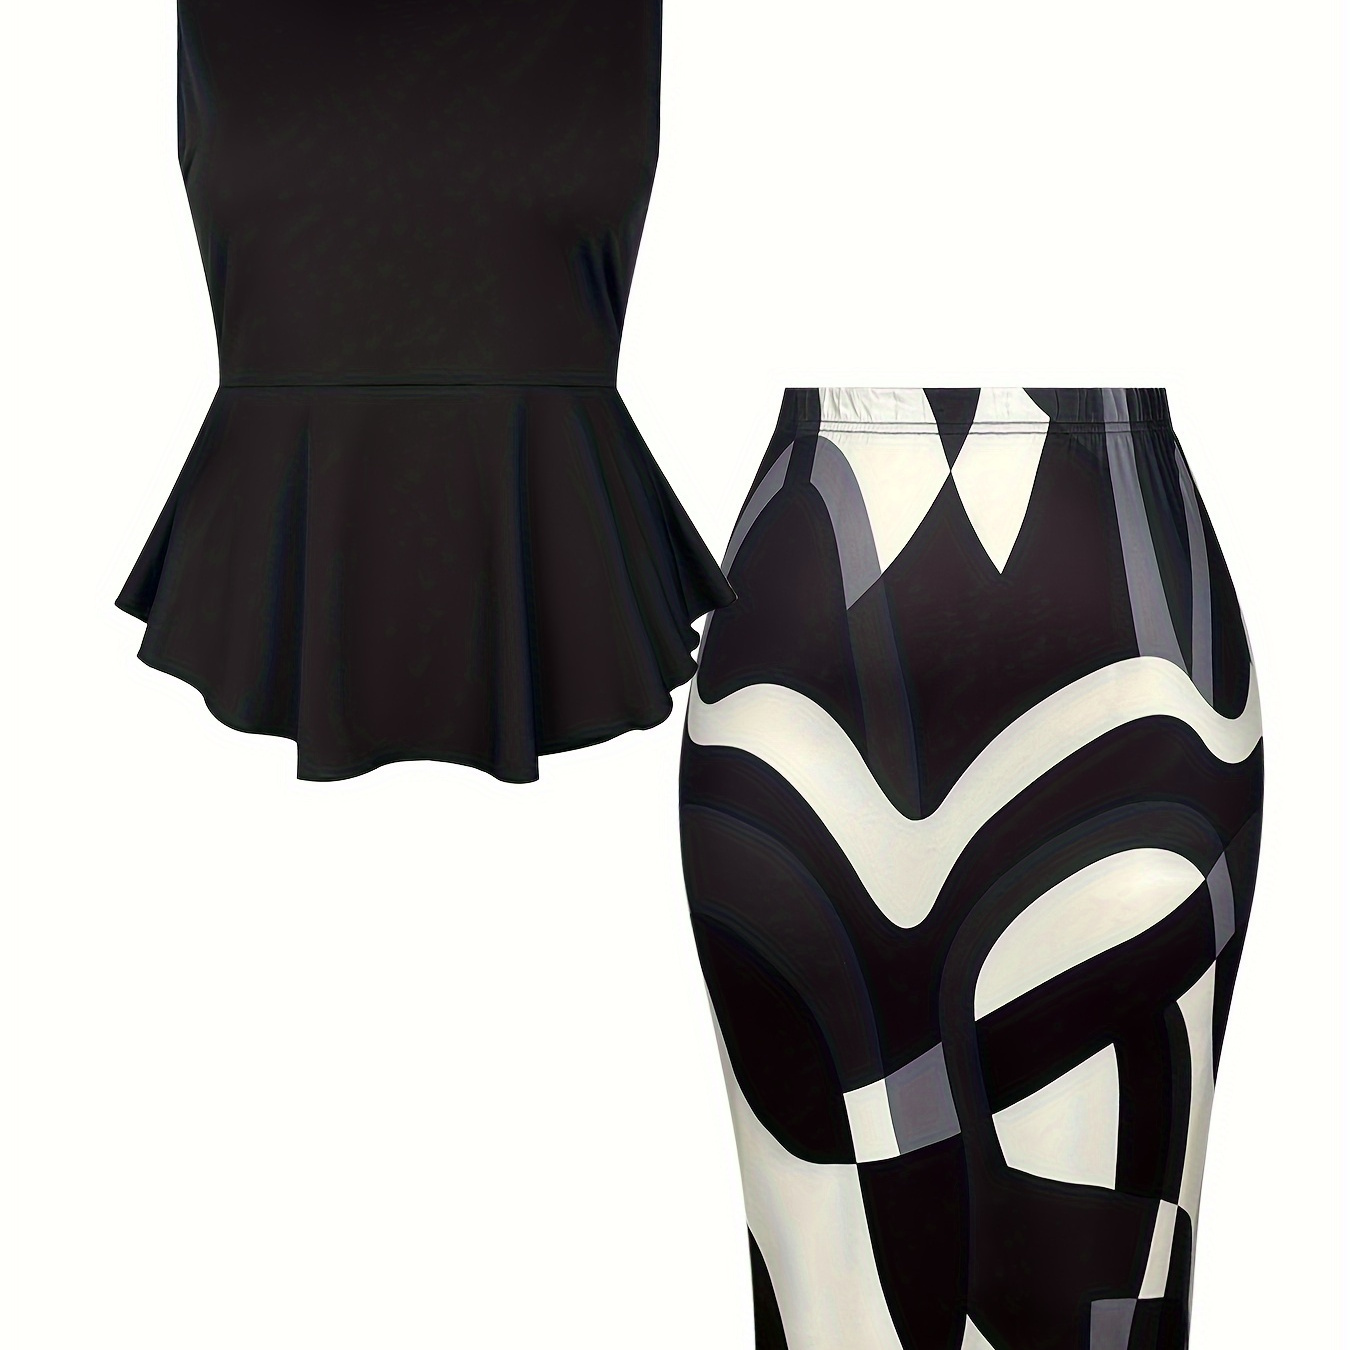 

Plus Size Elegant Spring & Summer Skirt Set, Solid Color Peplum Hem Sleeveless Top & Allover Print Skirt Outfits, Women's Plus Size Clothing